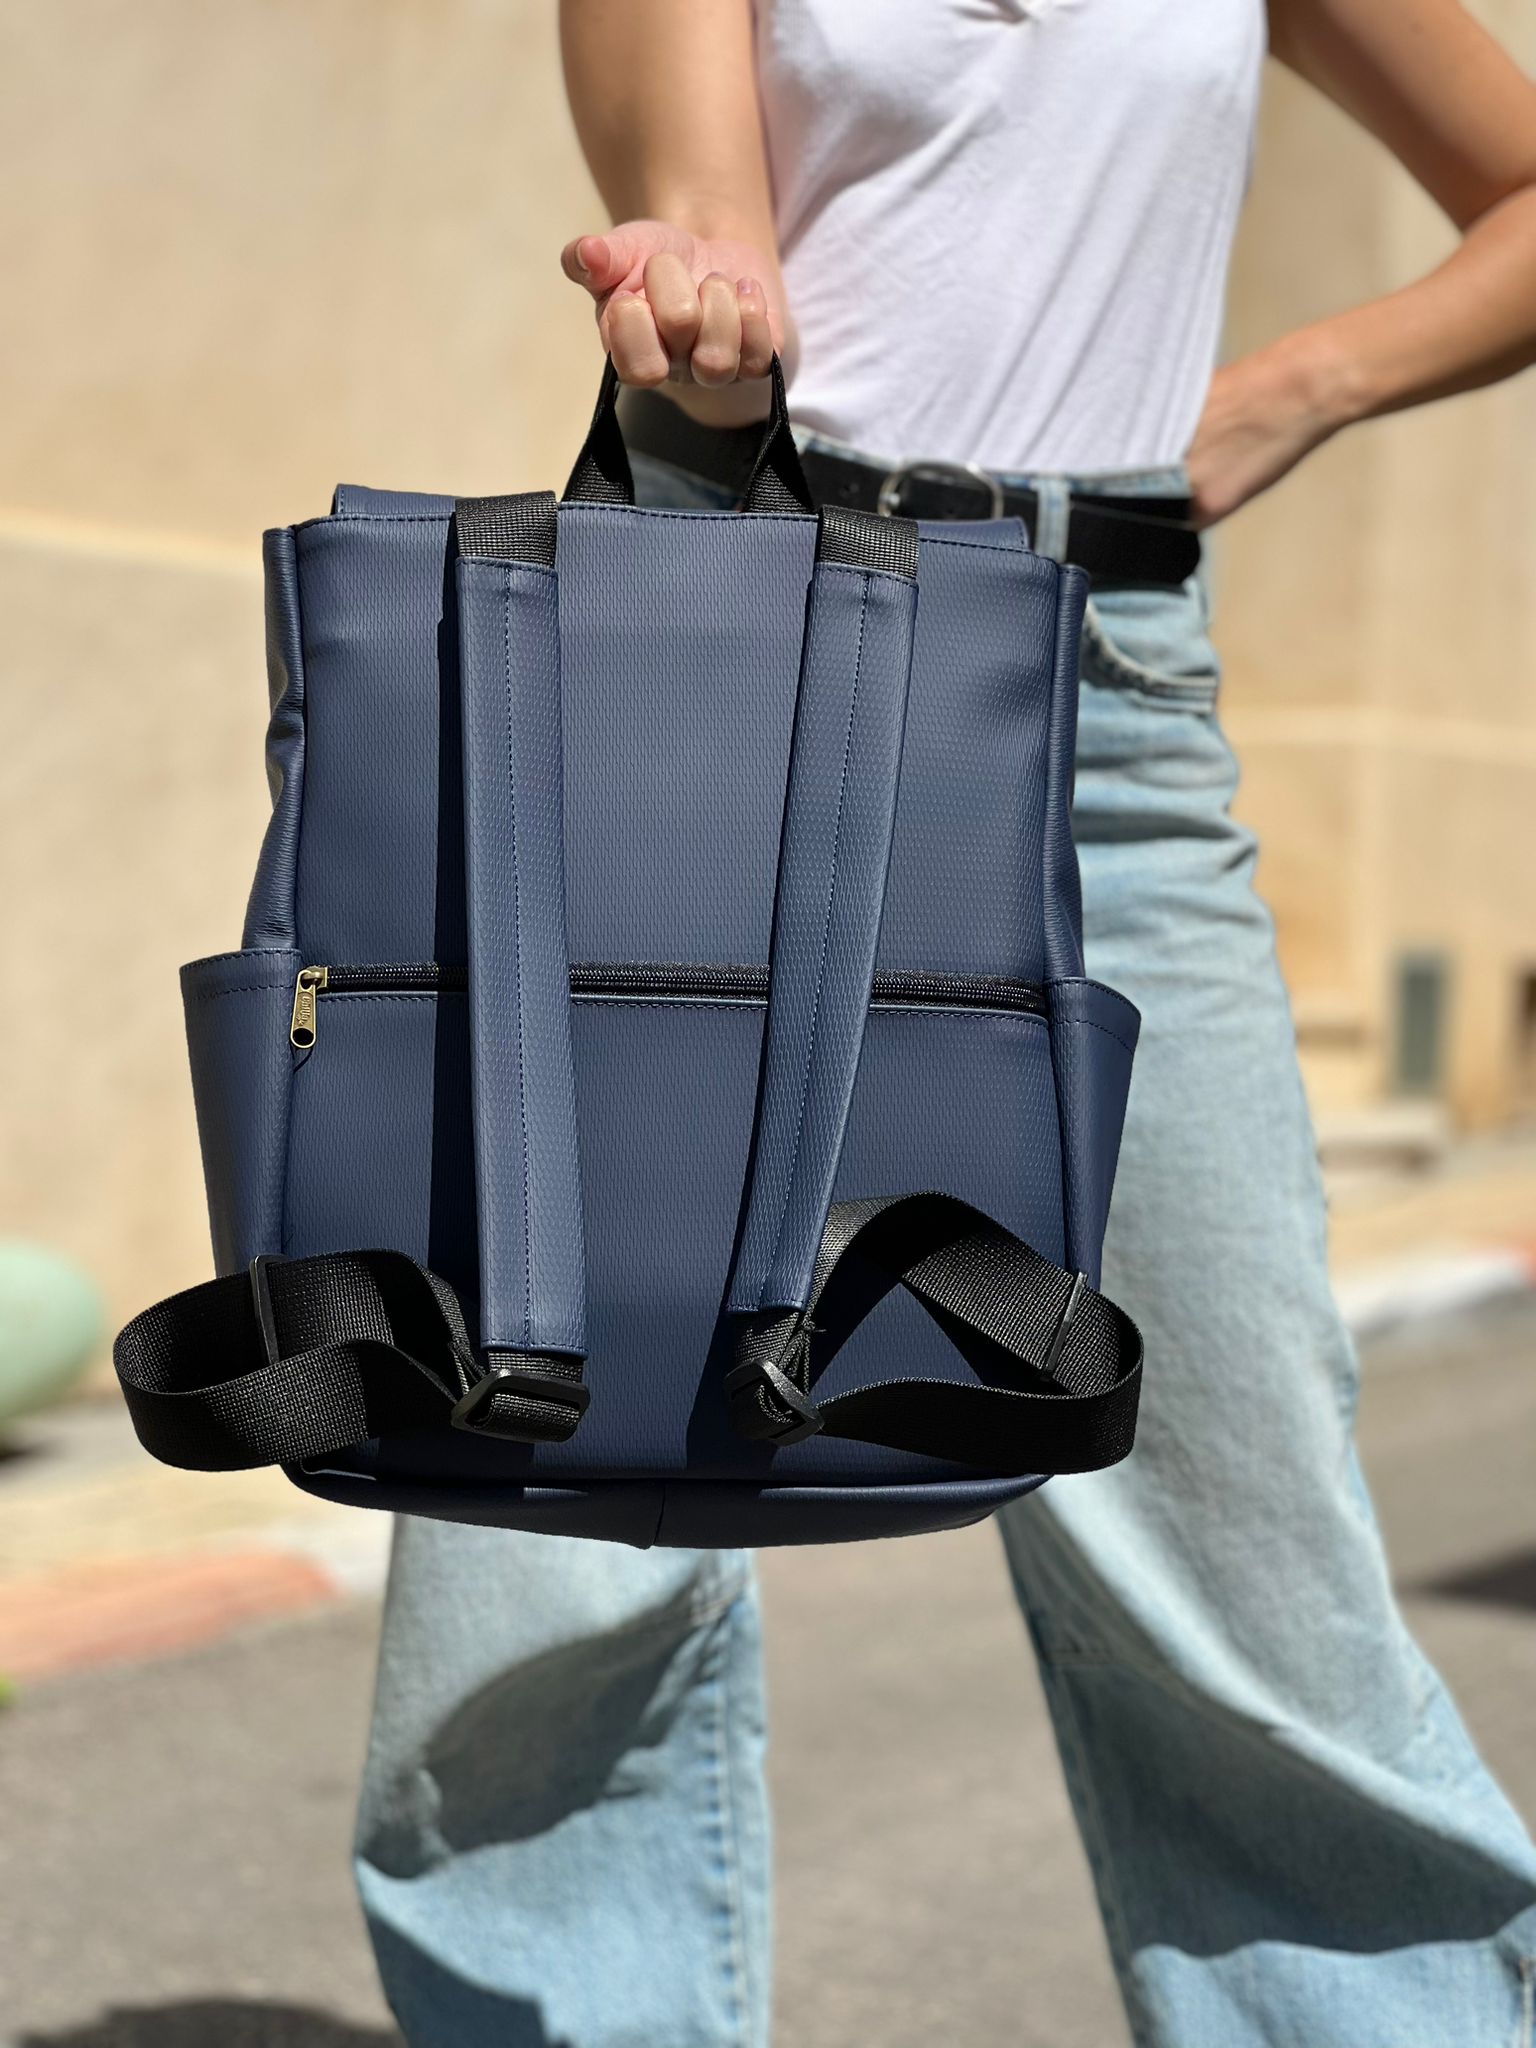 Textured Navy Blue Unicorn Backpack